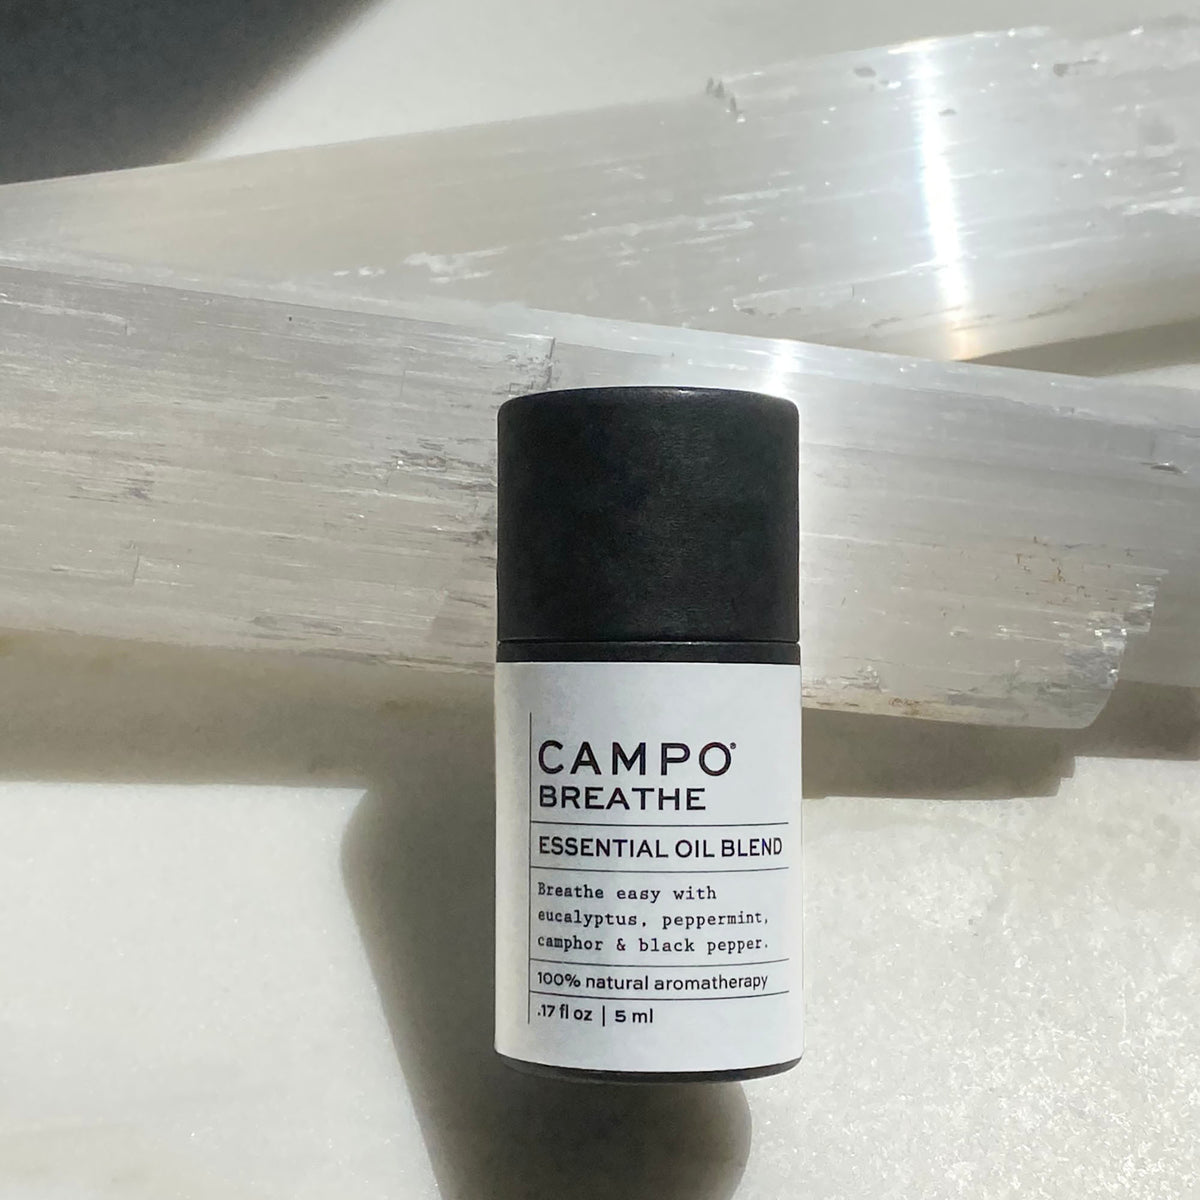 Campo Beauty, Essential Oil BREATHE Blend 5 ml Breathe easy with this 100% pure essential oil blend of Eucalyptus, Peppermint, Camphor &amp; Black Pepper.